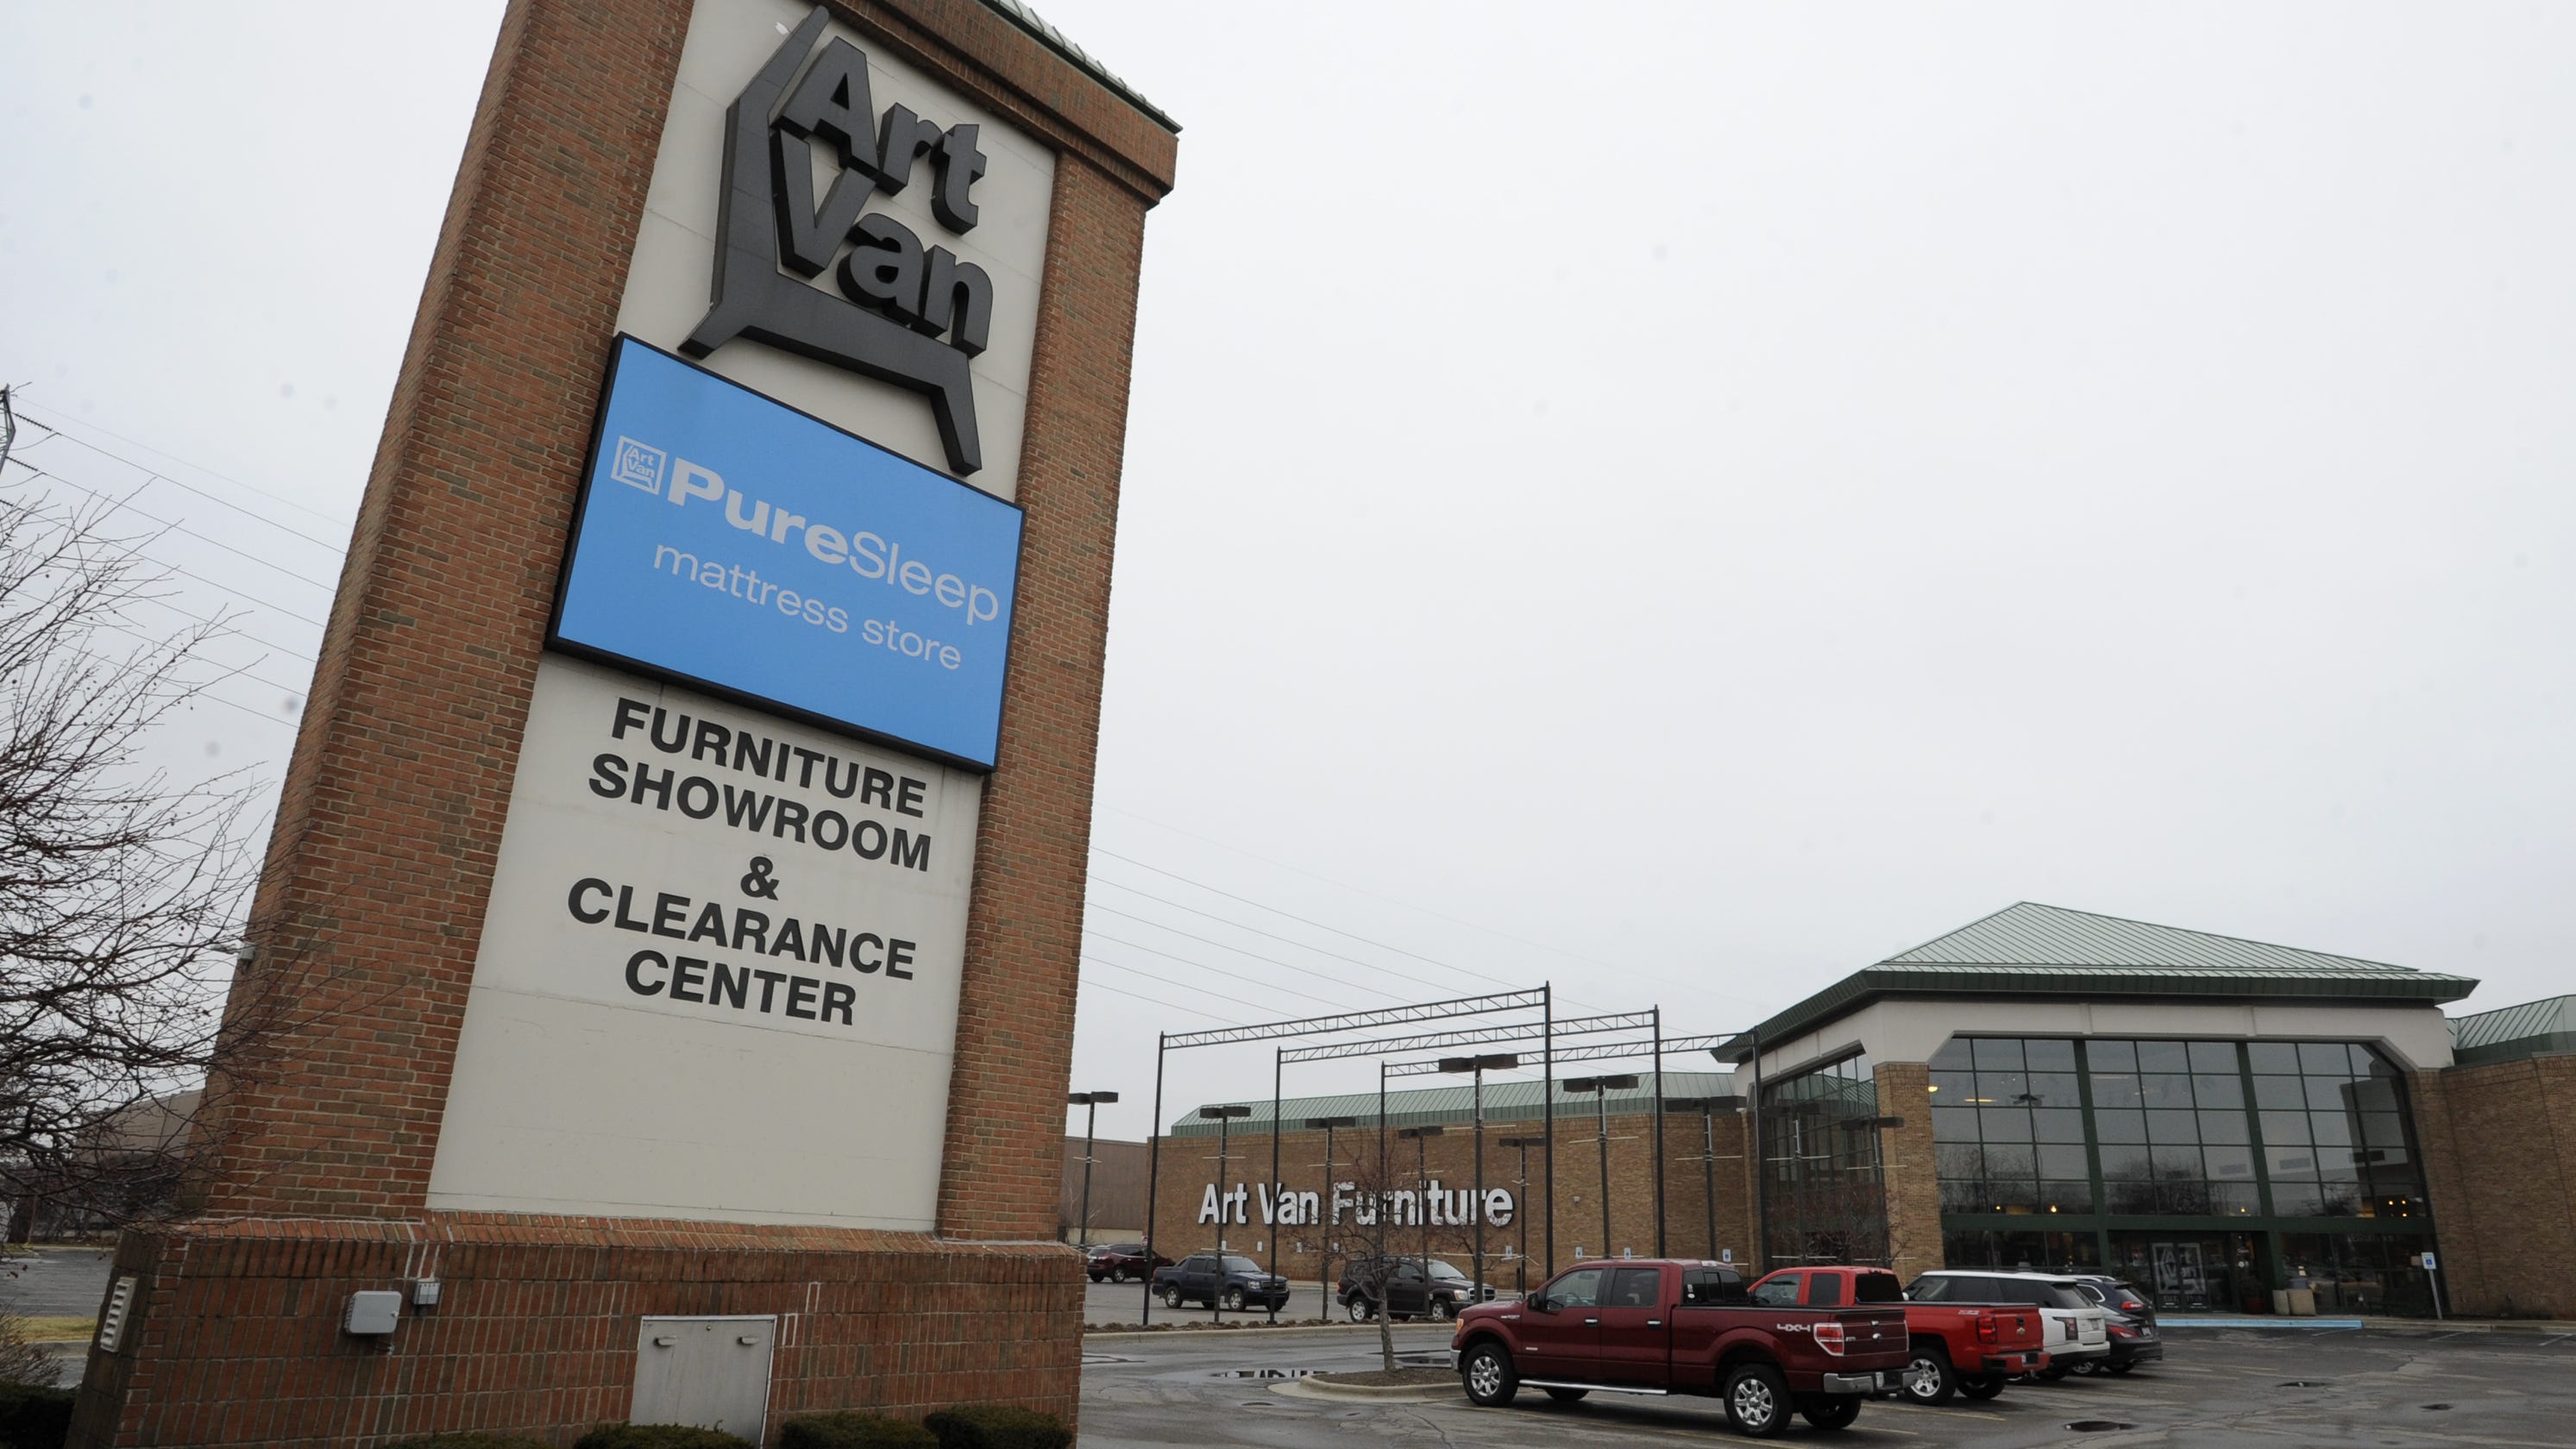 Rep Rashida Tlaib Asks Equity Firm To Cover Insurance For Art Van